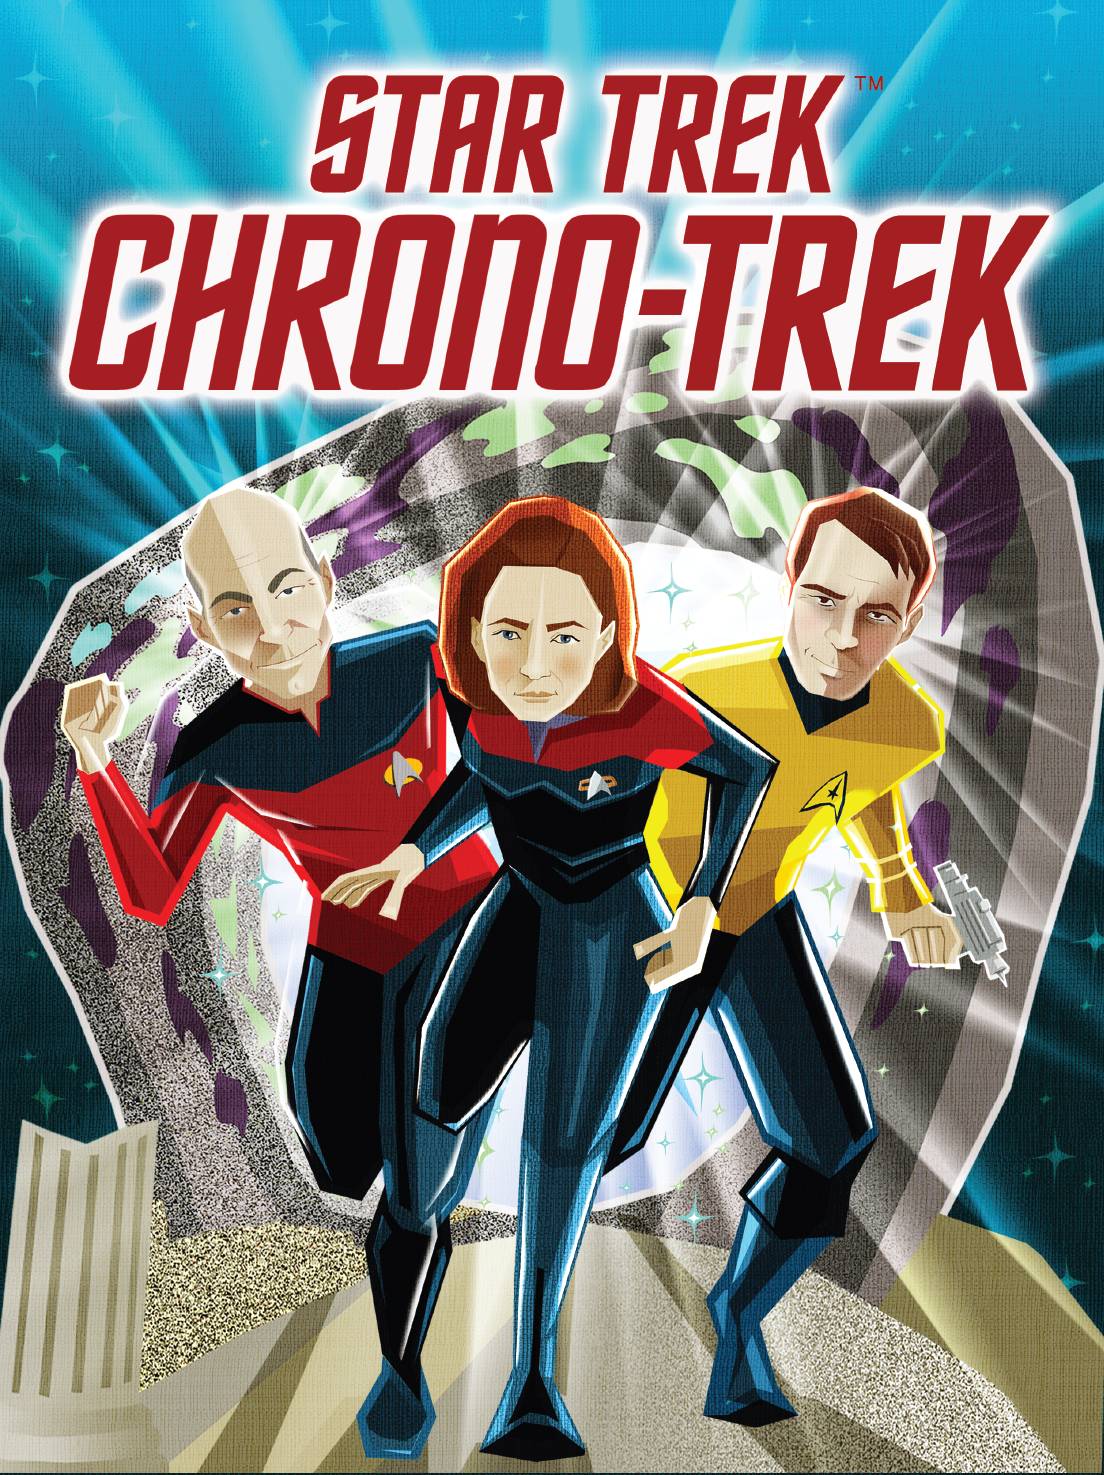 Star Trek Chrono Trek Card Game